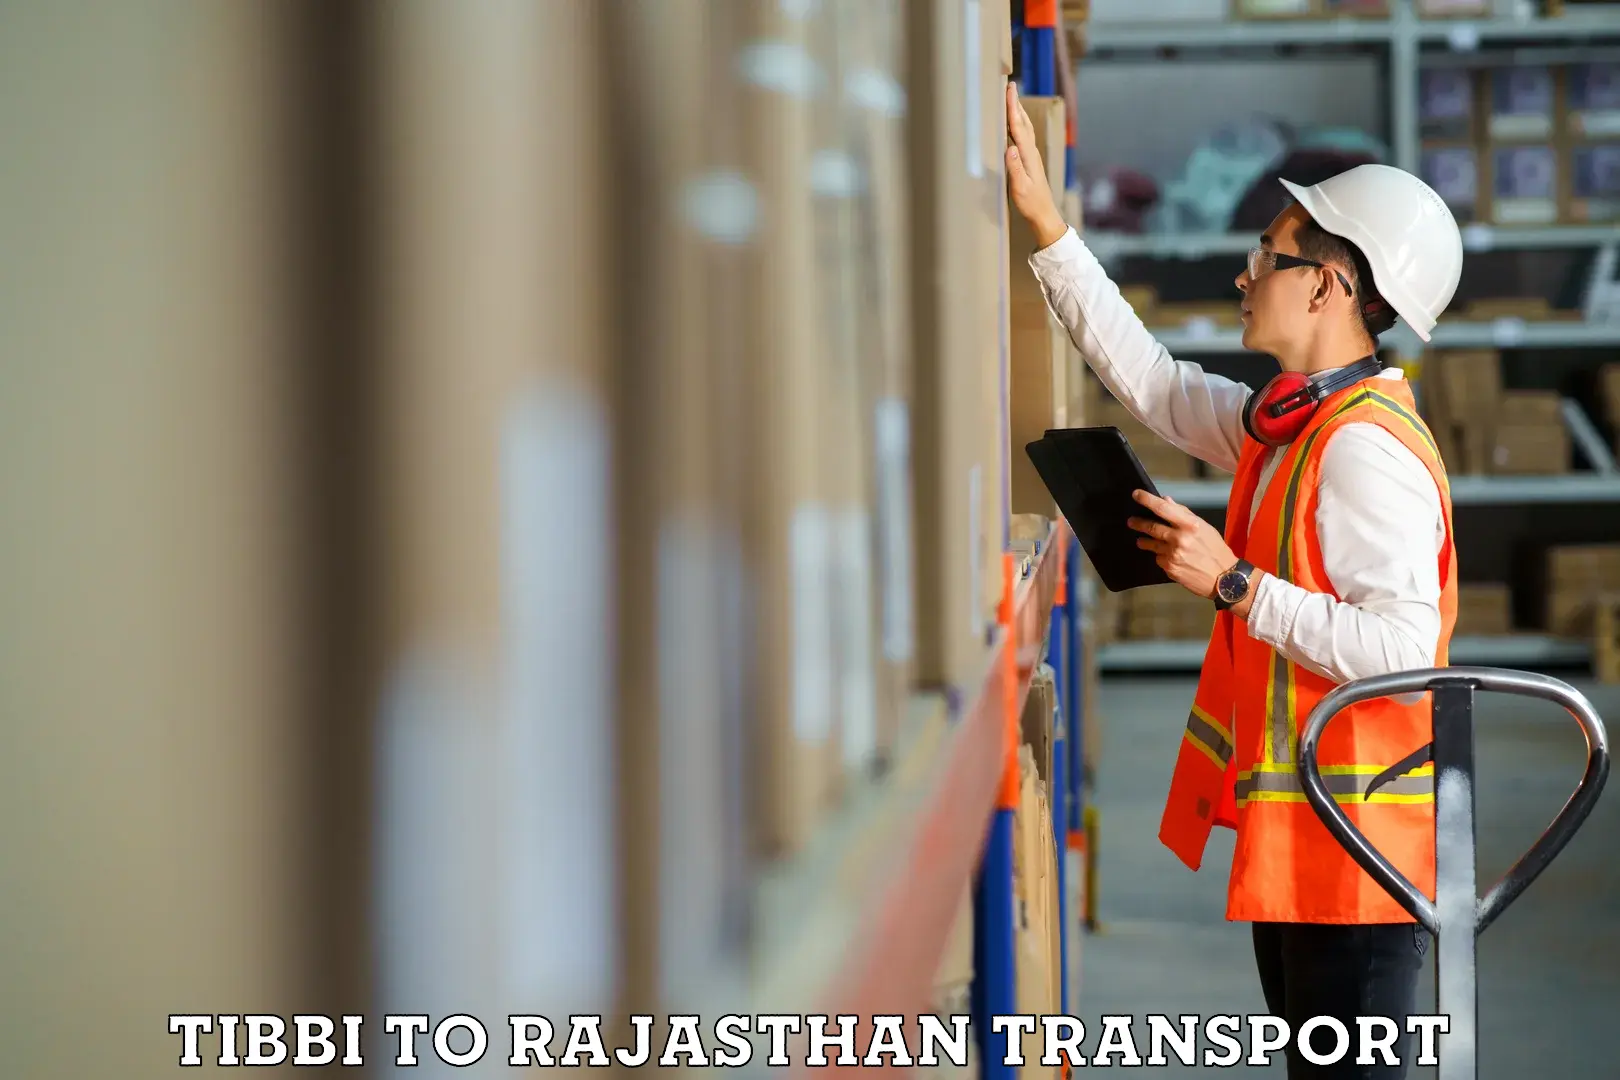 Transportation services in Tibbi to Jaipur